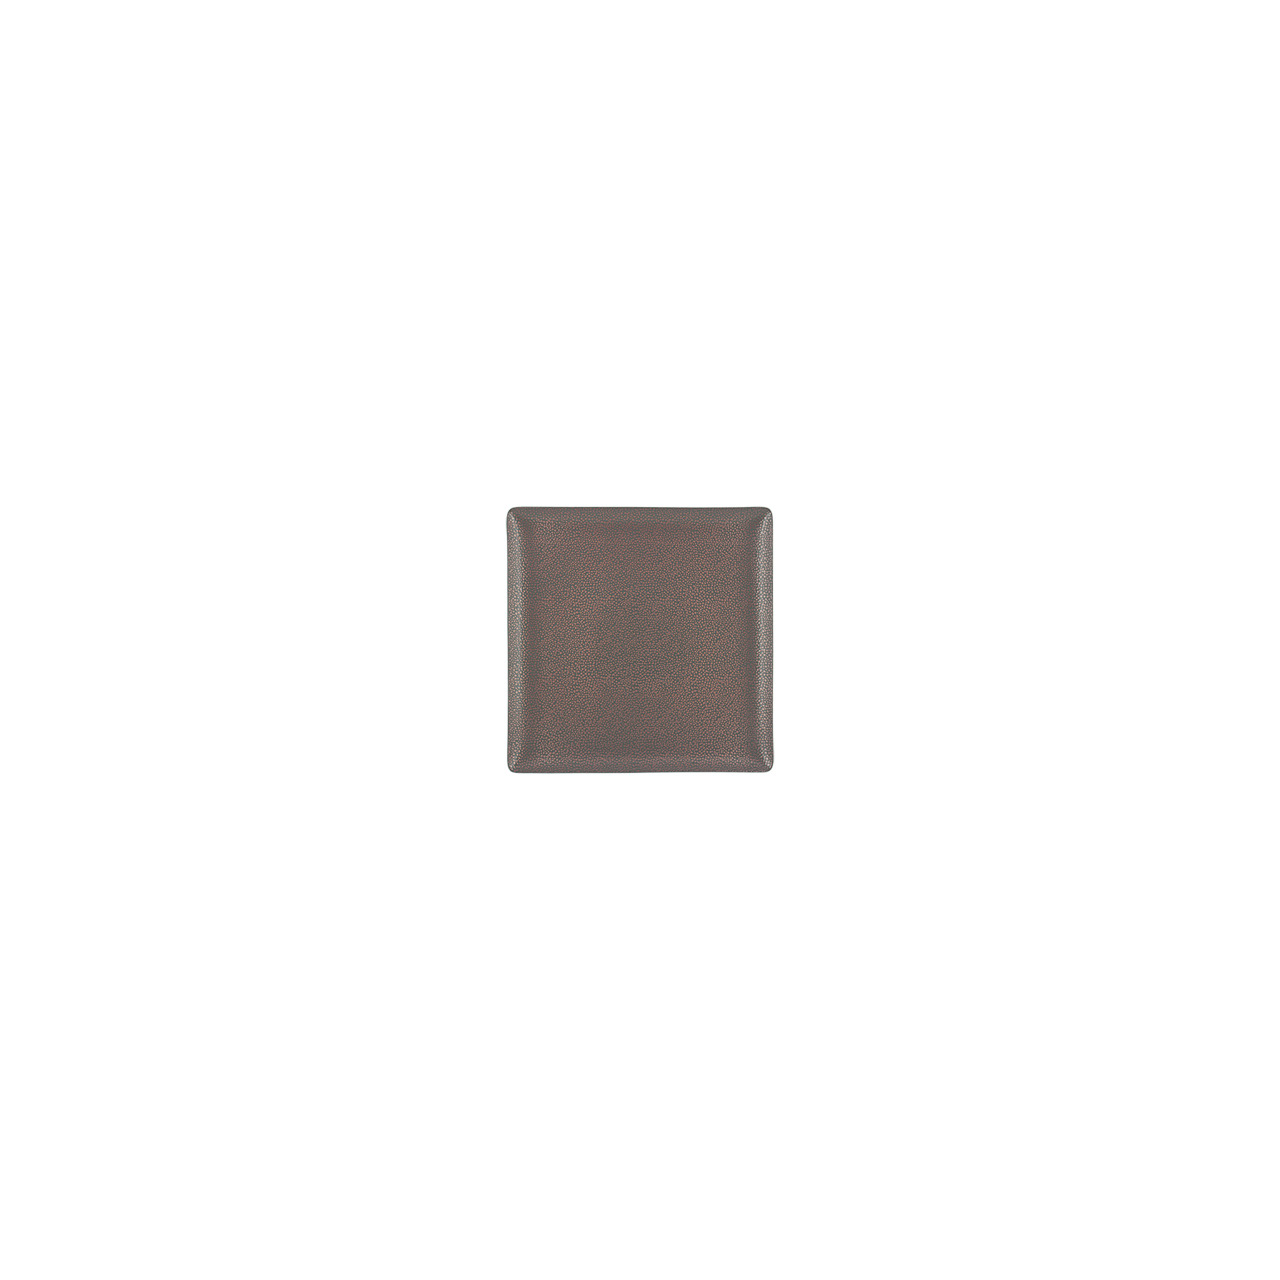 Pearls, Coupteller flach quadratisch 88 x 88 mm metallic copper